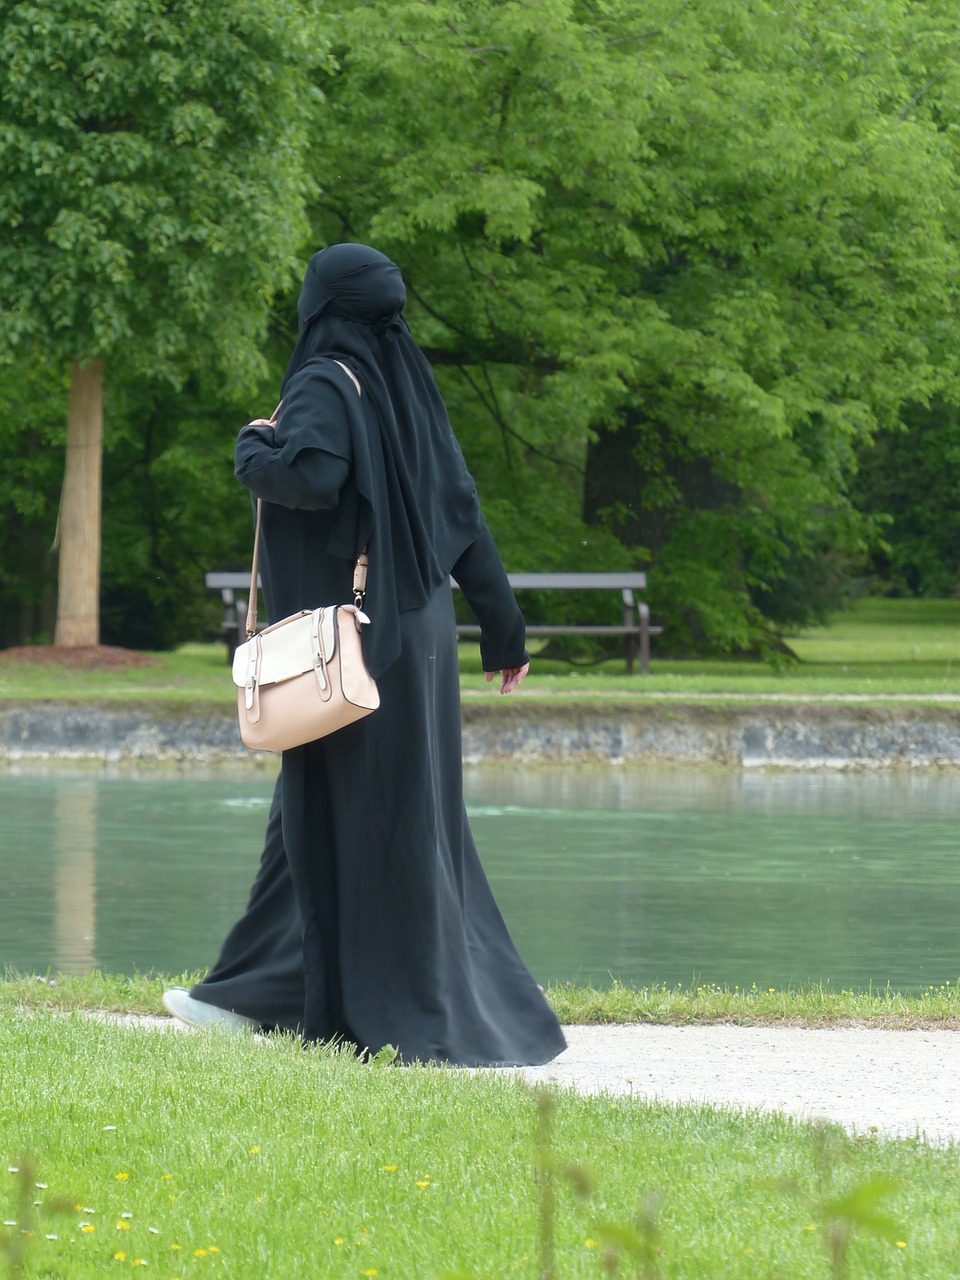 burka muslim garment free photo